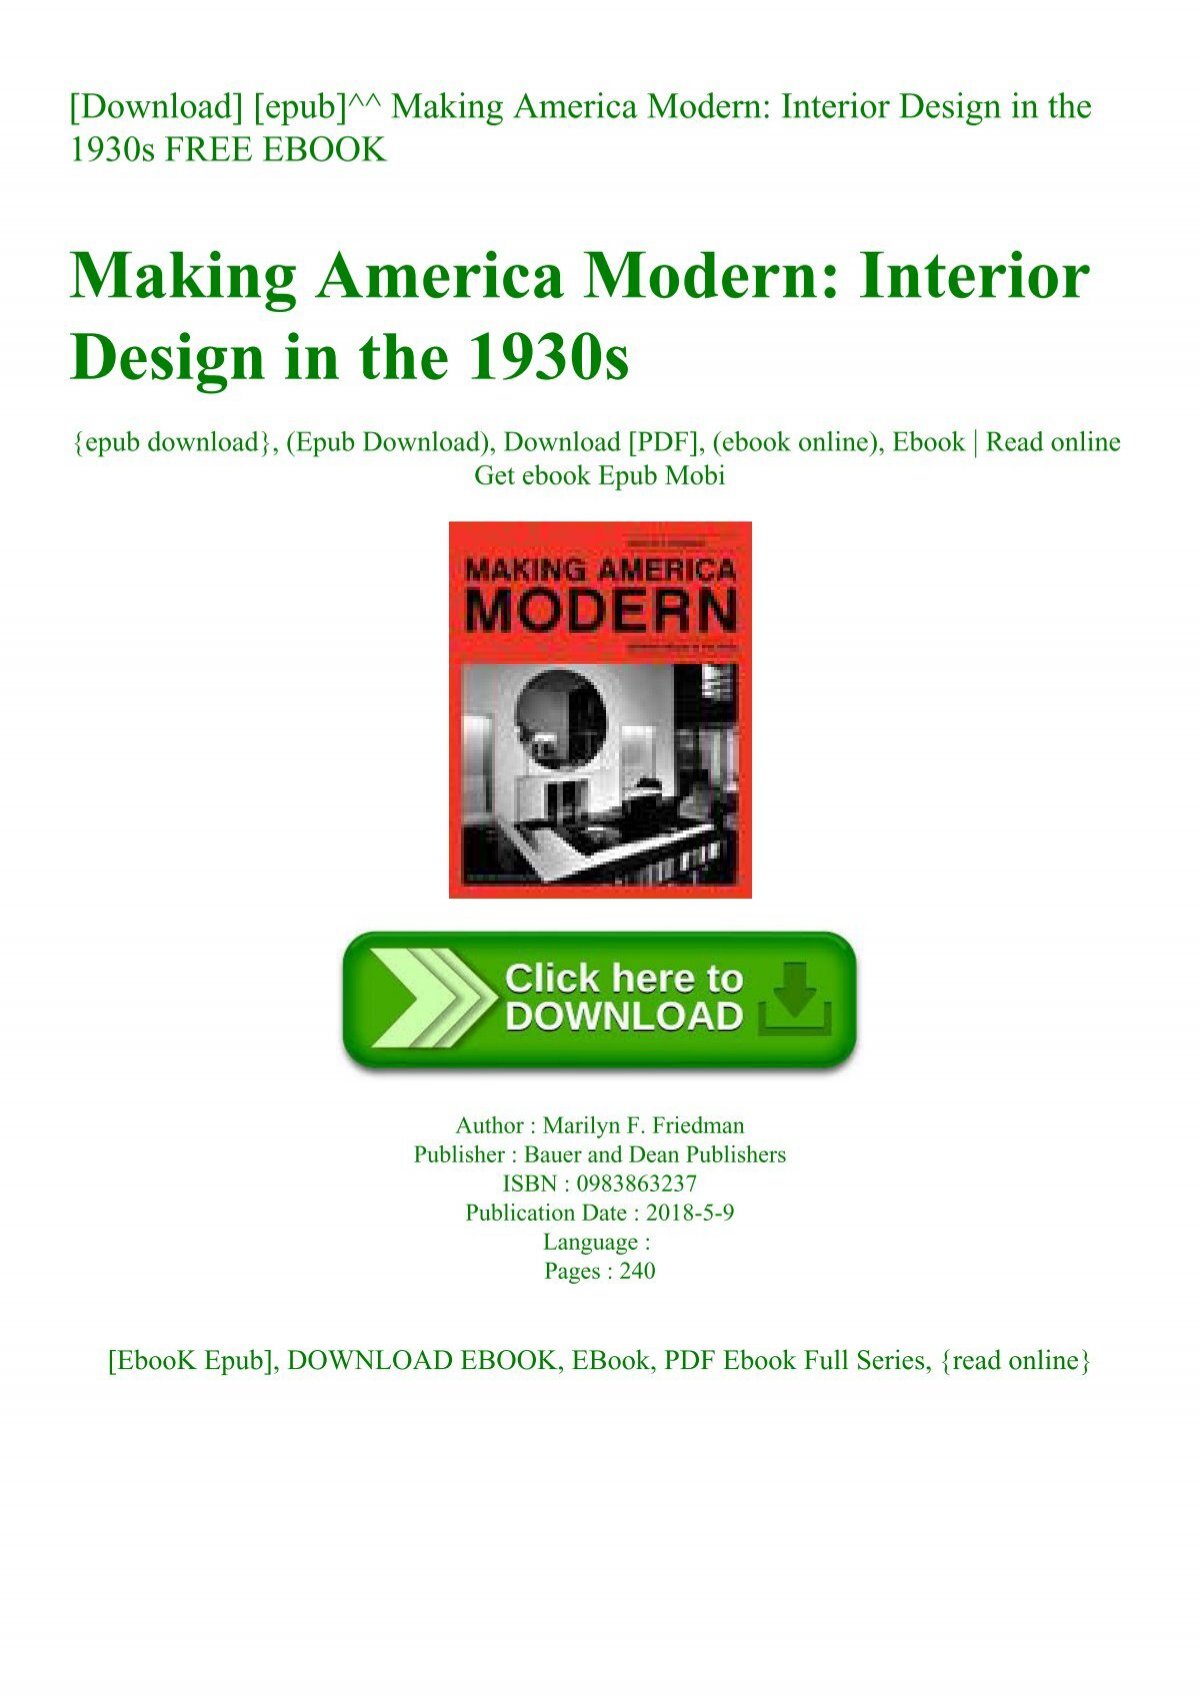 Download Epub Making America Modern Interior Design In